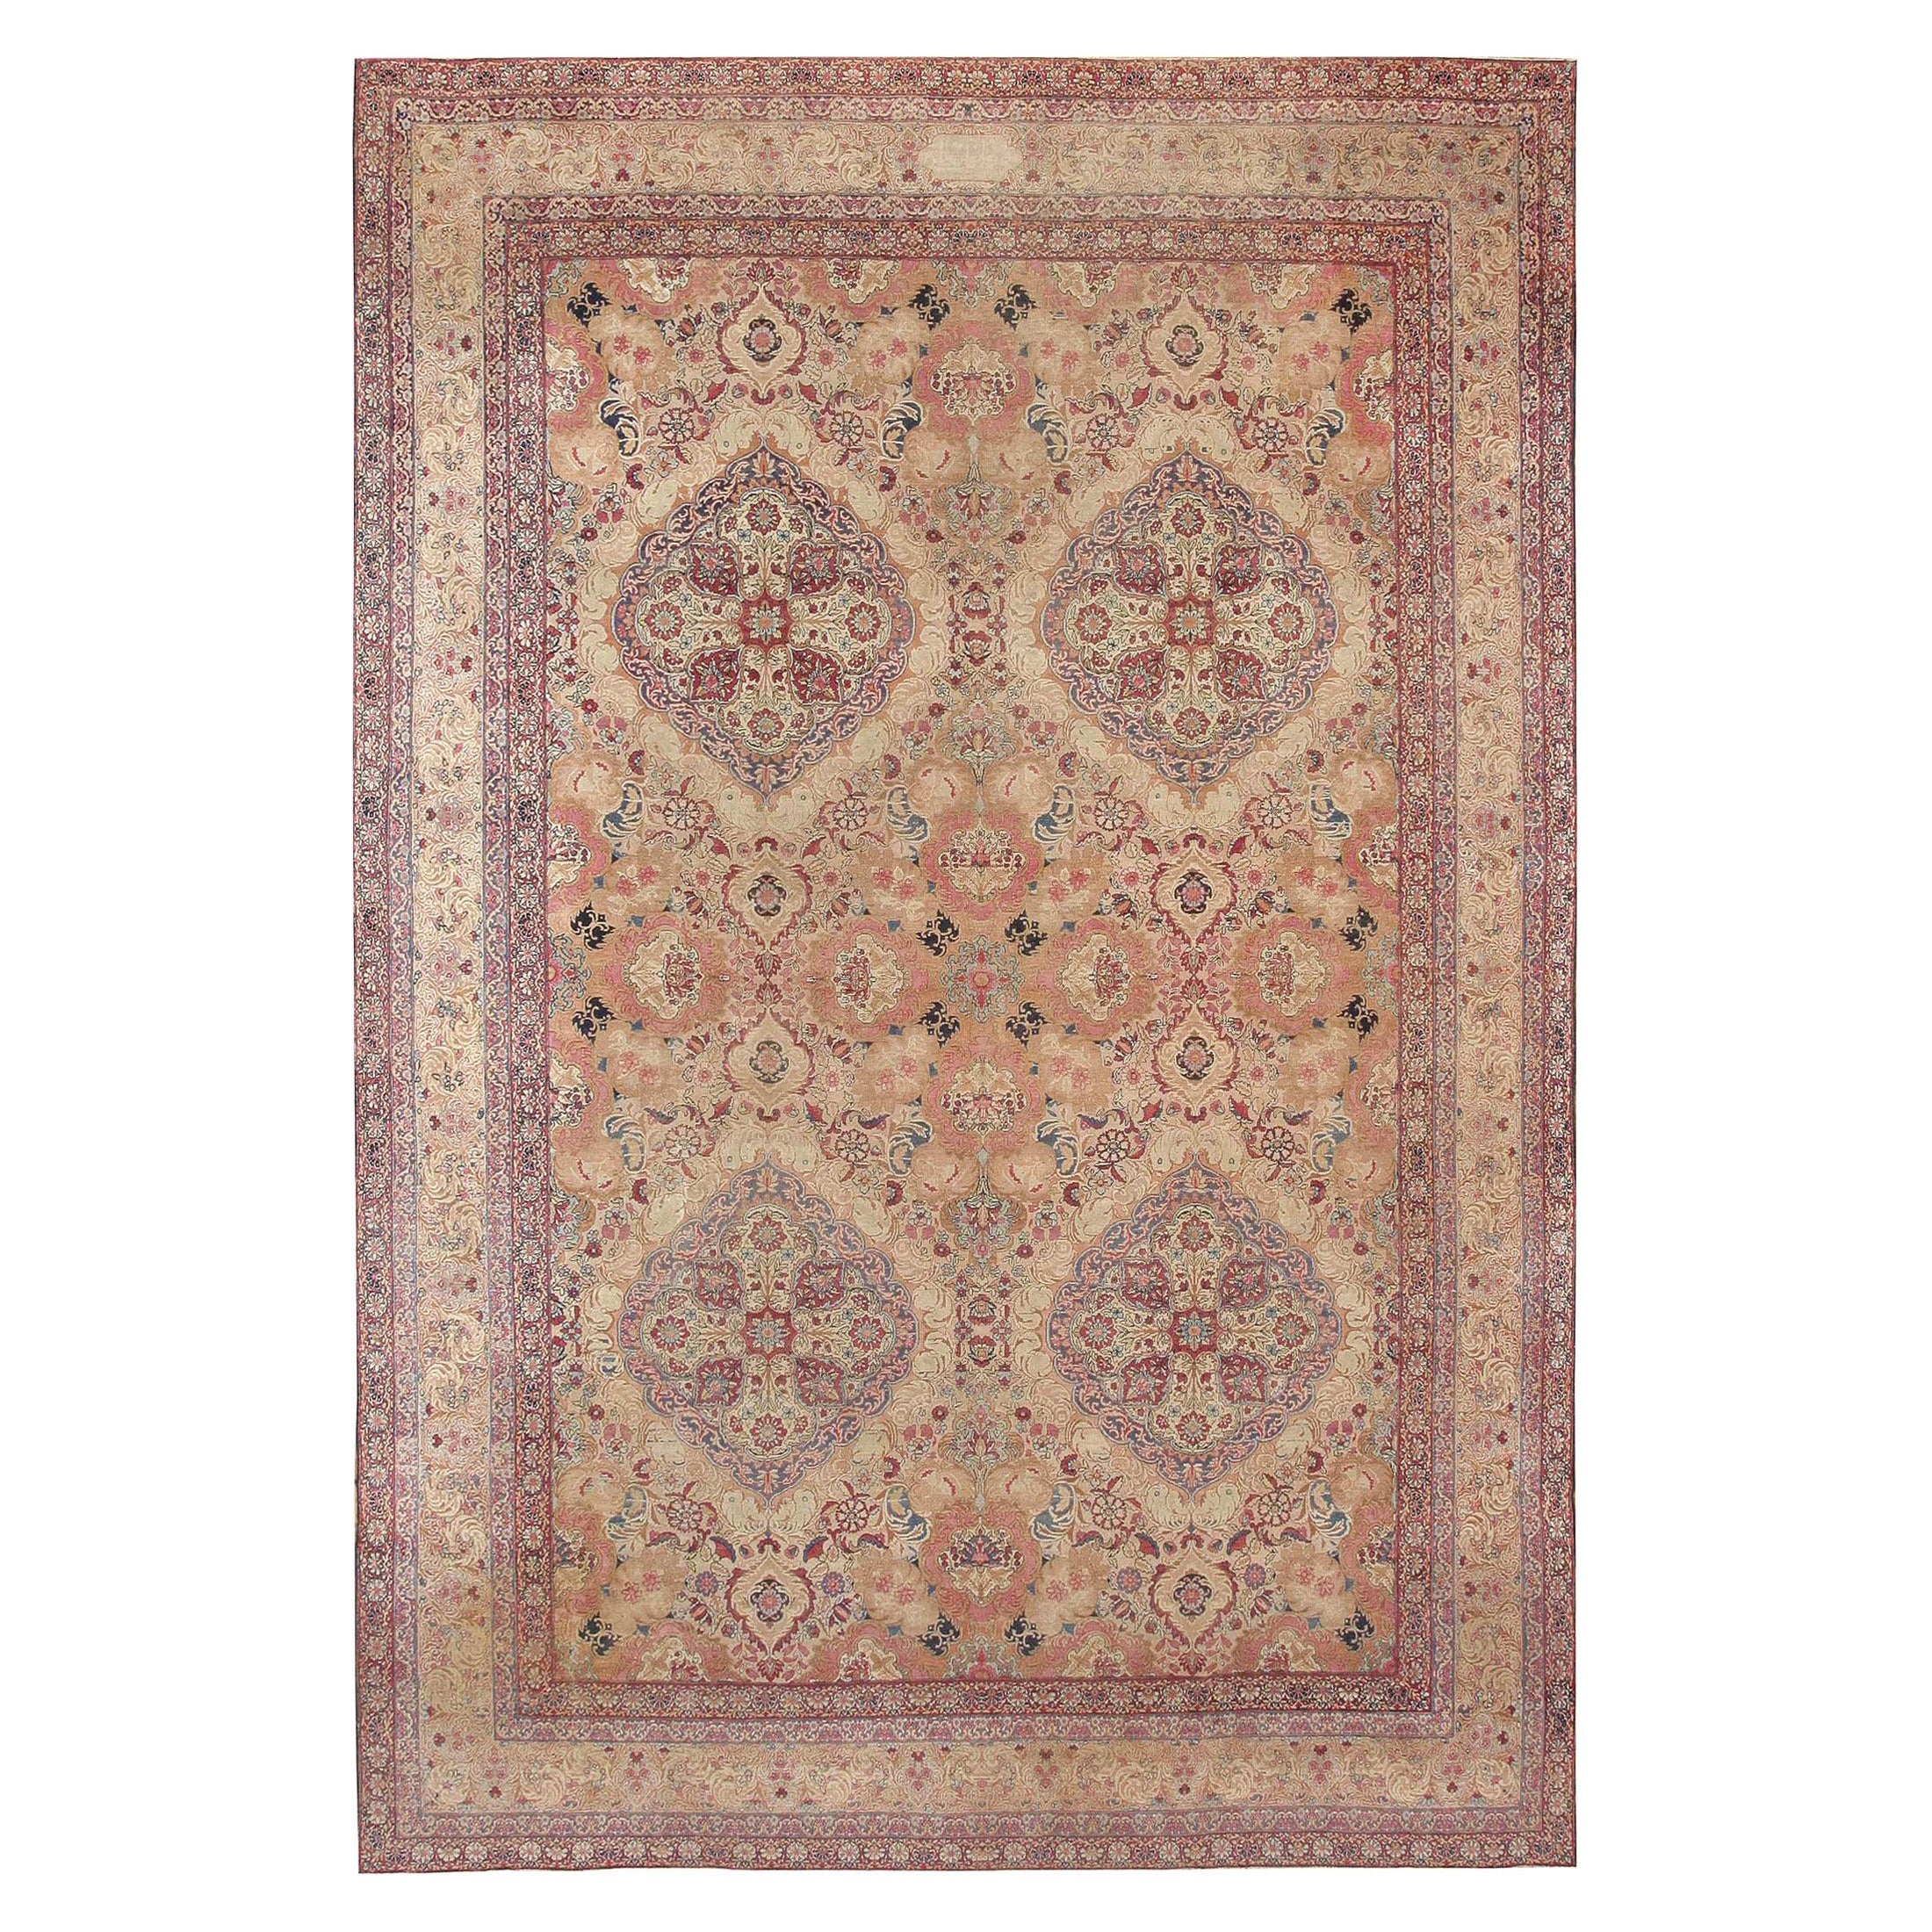 Antique Persian Kerman Lavar Carpet. 10 ft x 14 ft 5 in